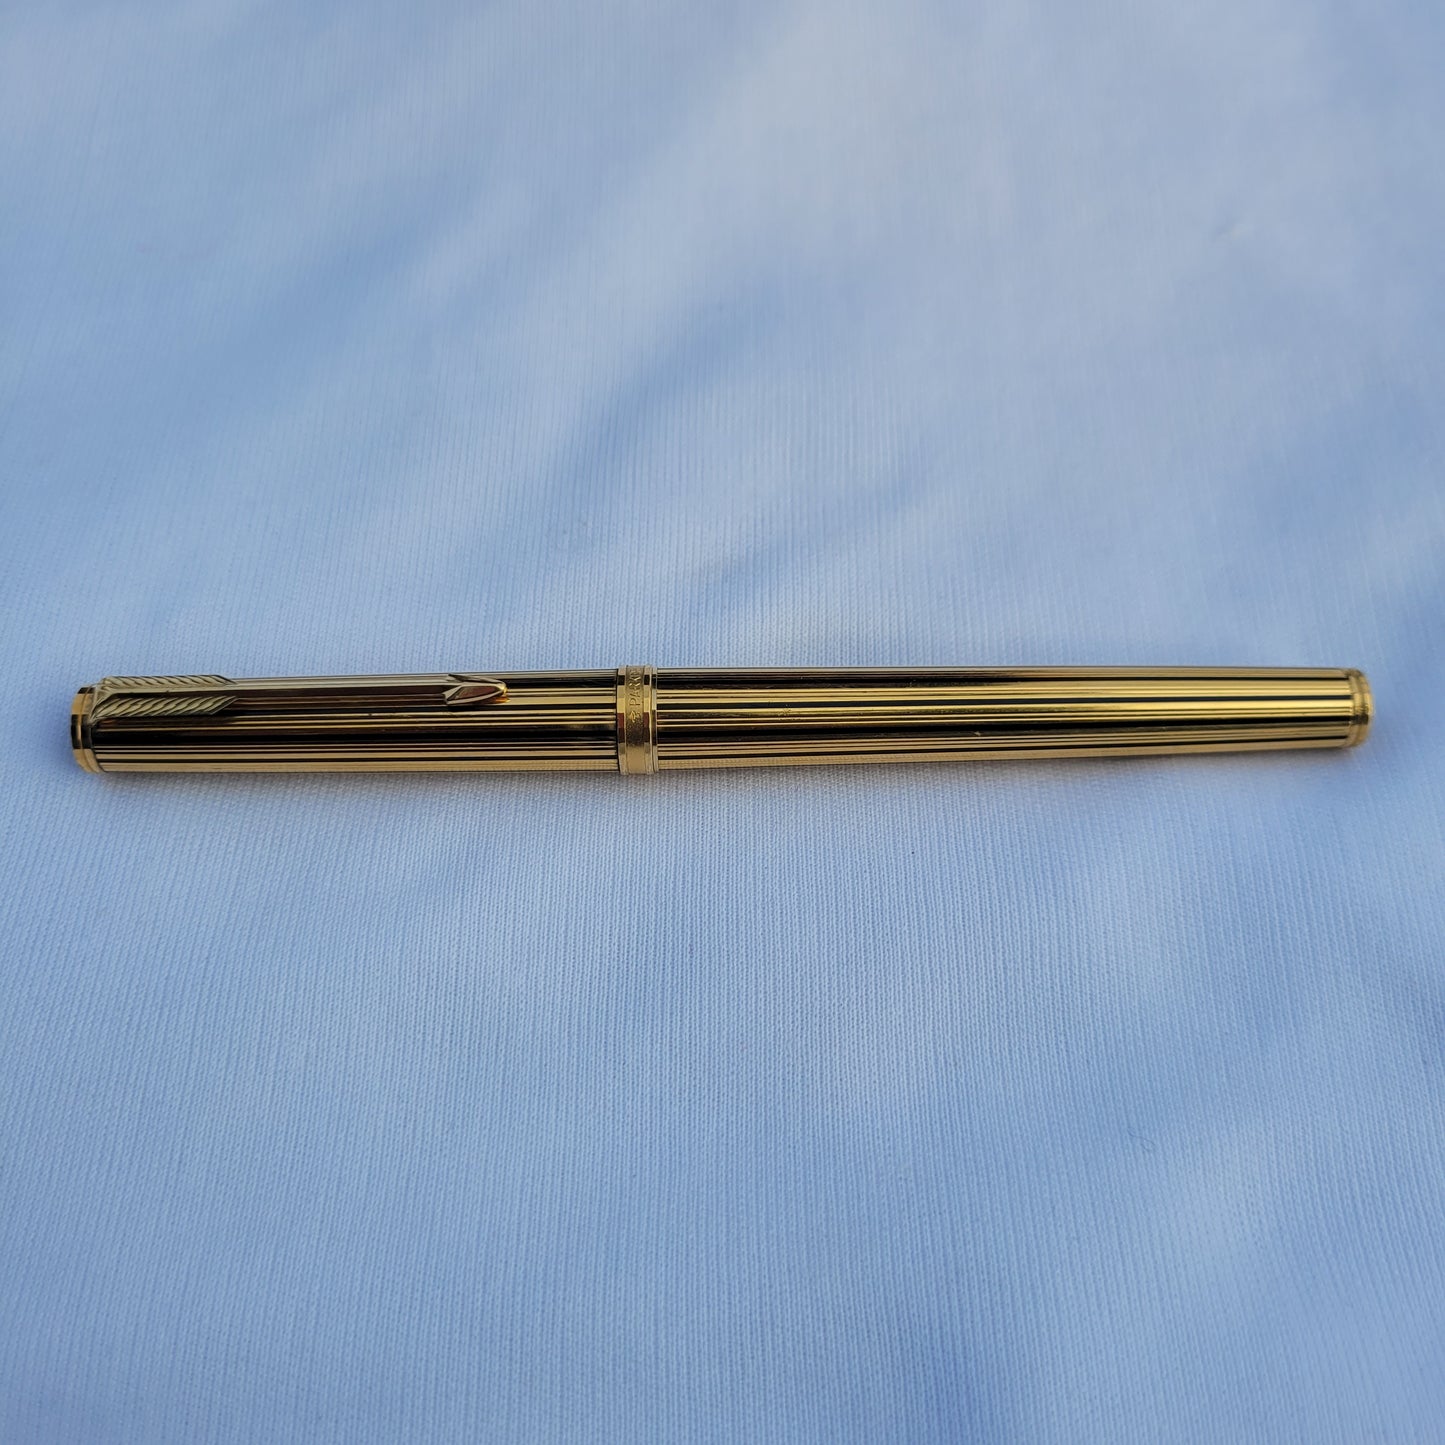 Parker Premier Fountain Pen Gold Plated & Lacquer Black Striped